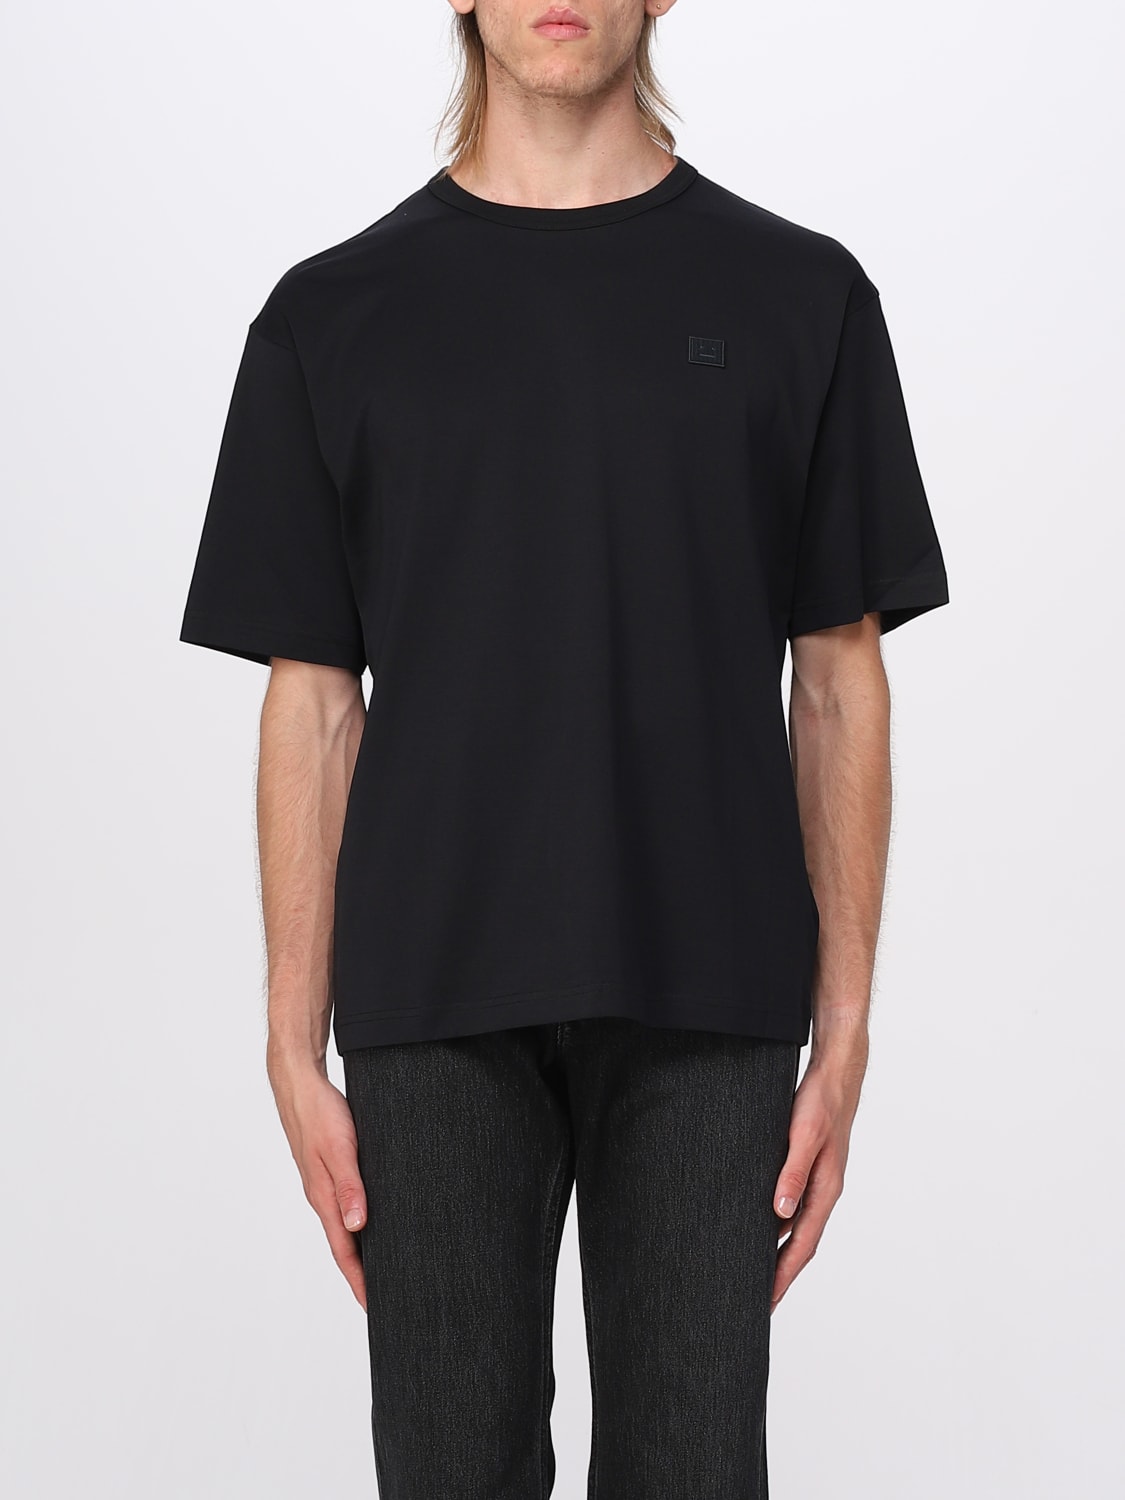 ACNE STUDIOS: t-shirt for man - Black | Acne Studios t-shirt CL0206 ...